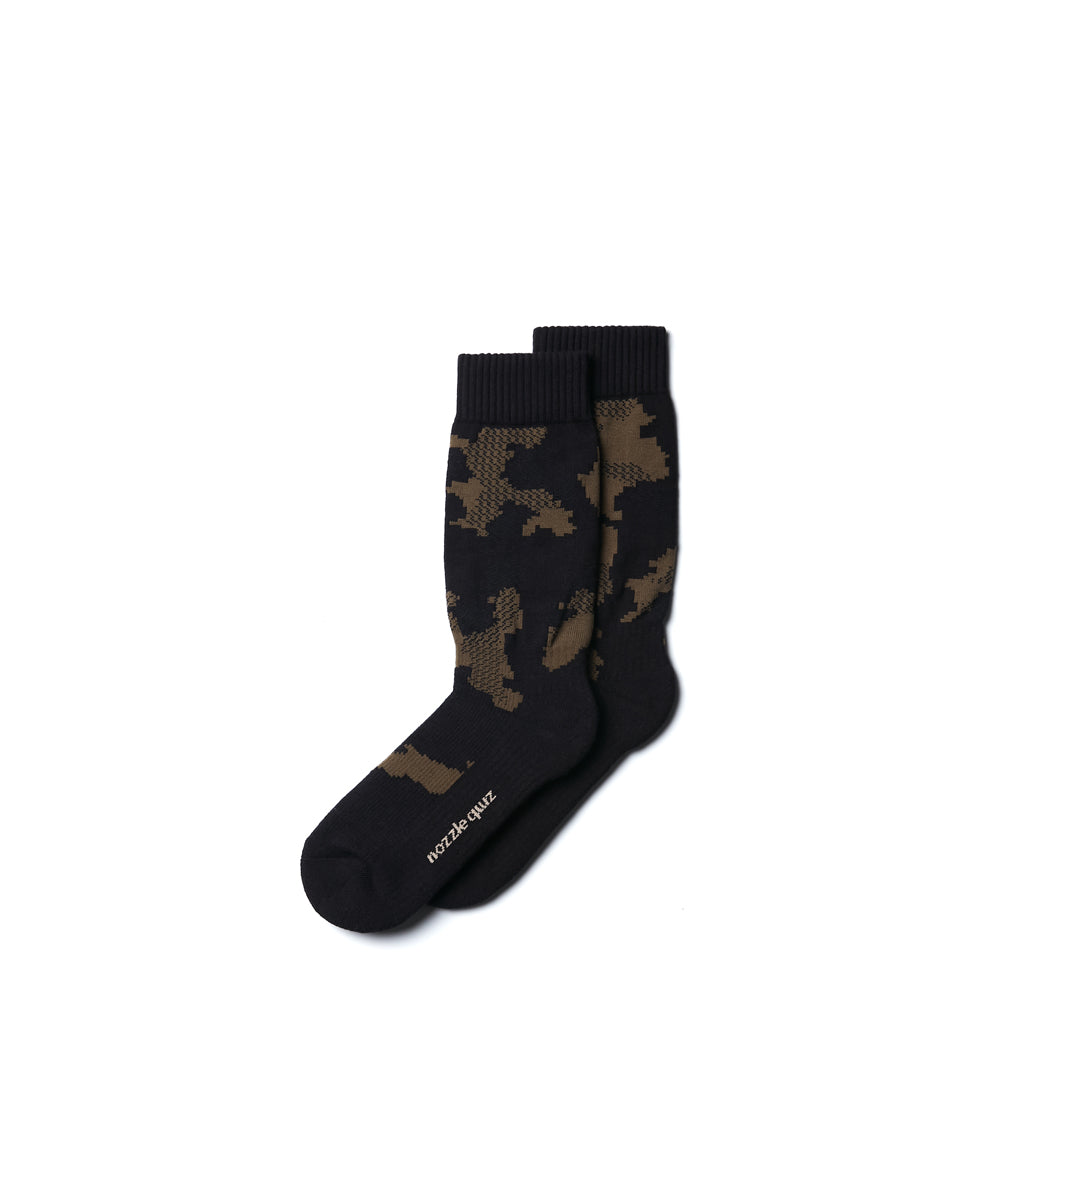 Digit No. Jacquard casual socks - Land Black